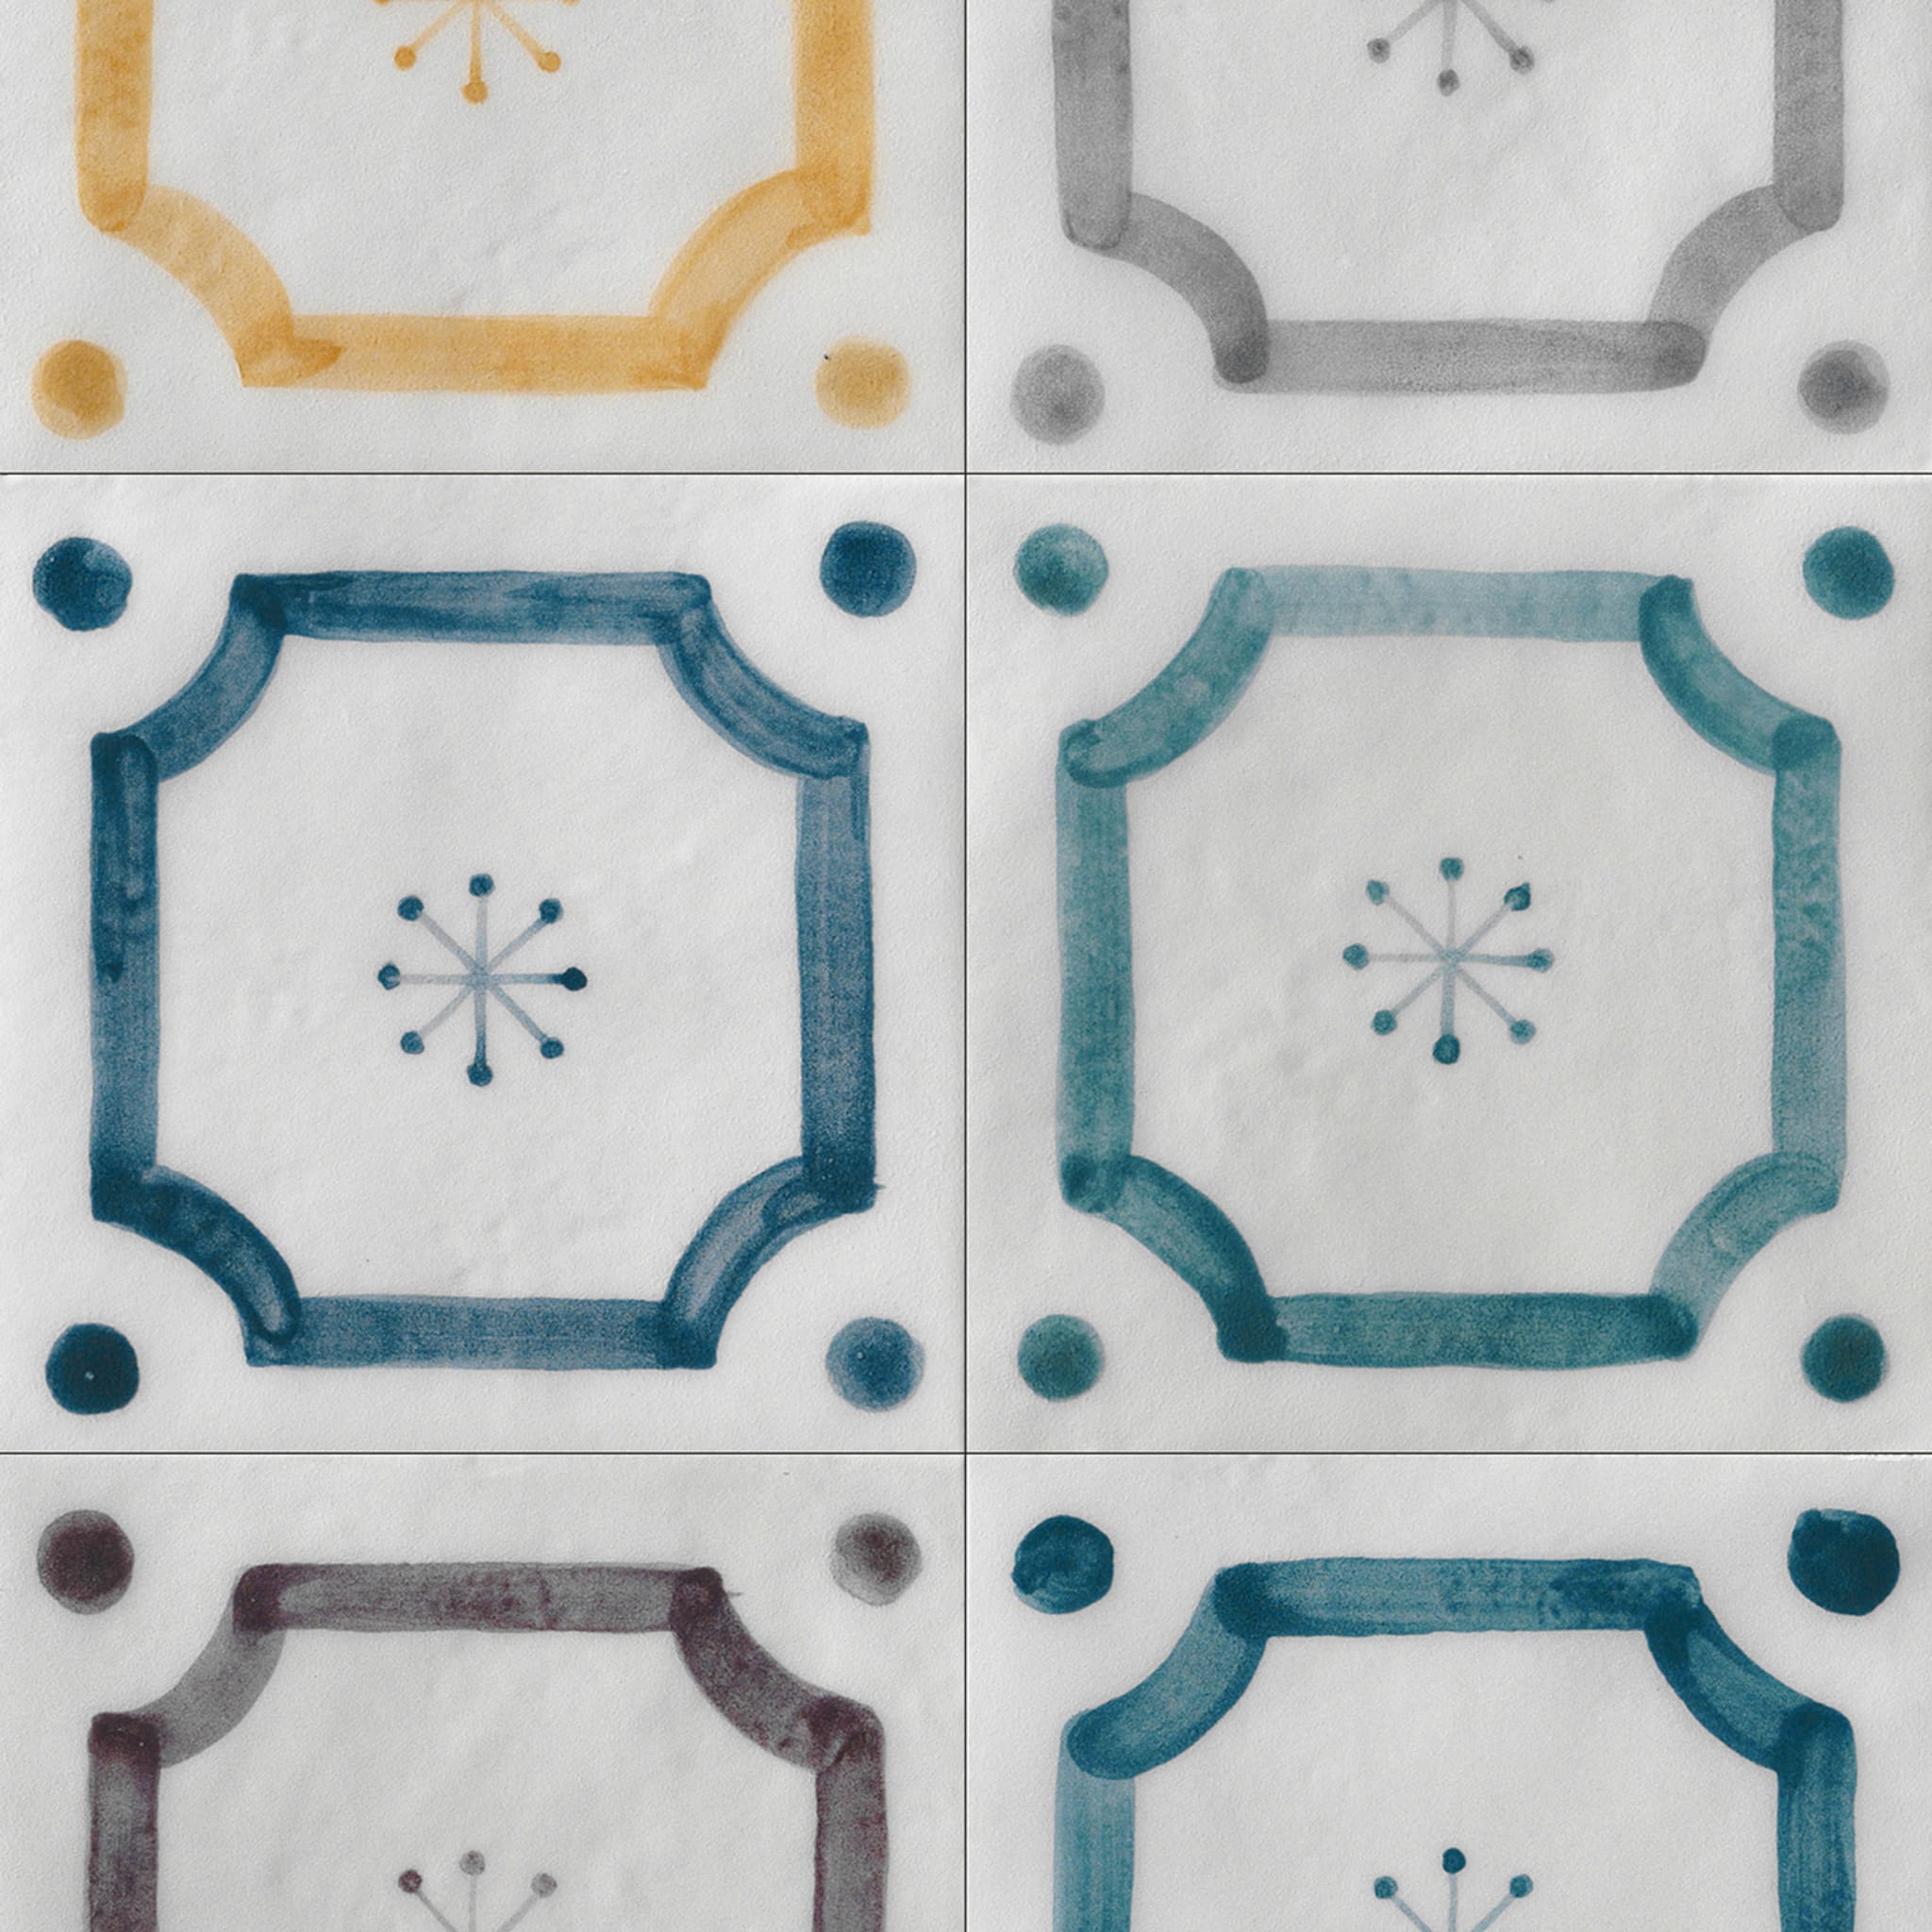 Ot Budoni Plum Set of 24 Square Tiles - Alternative view 1